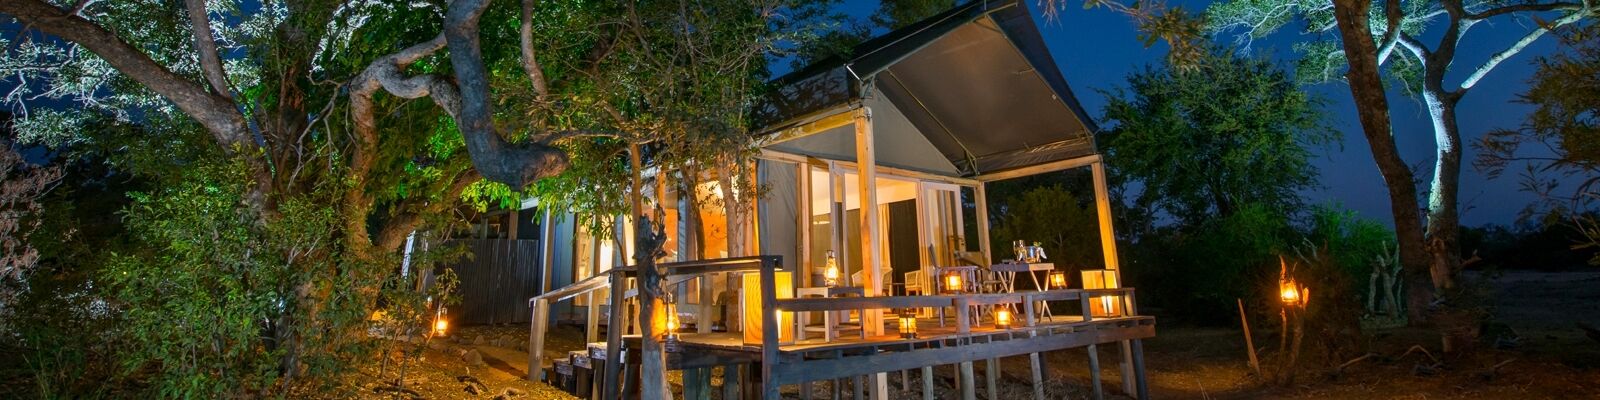 Simbavati River Lodge, Luxury tent